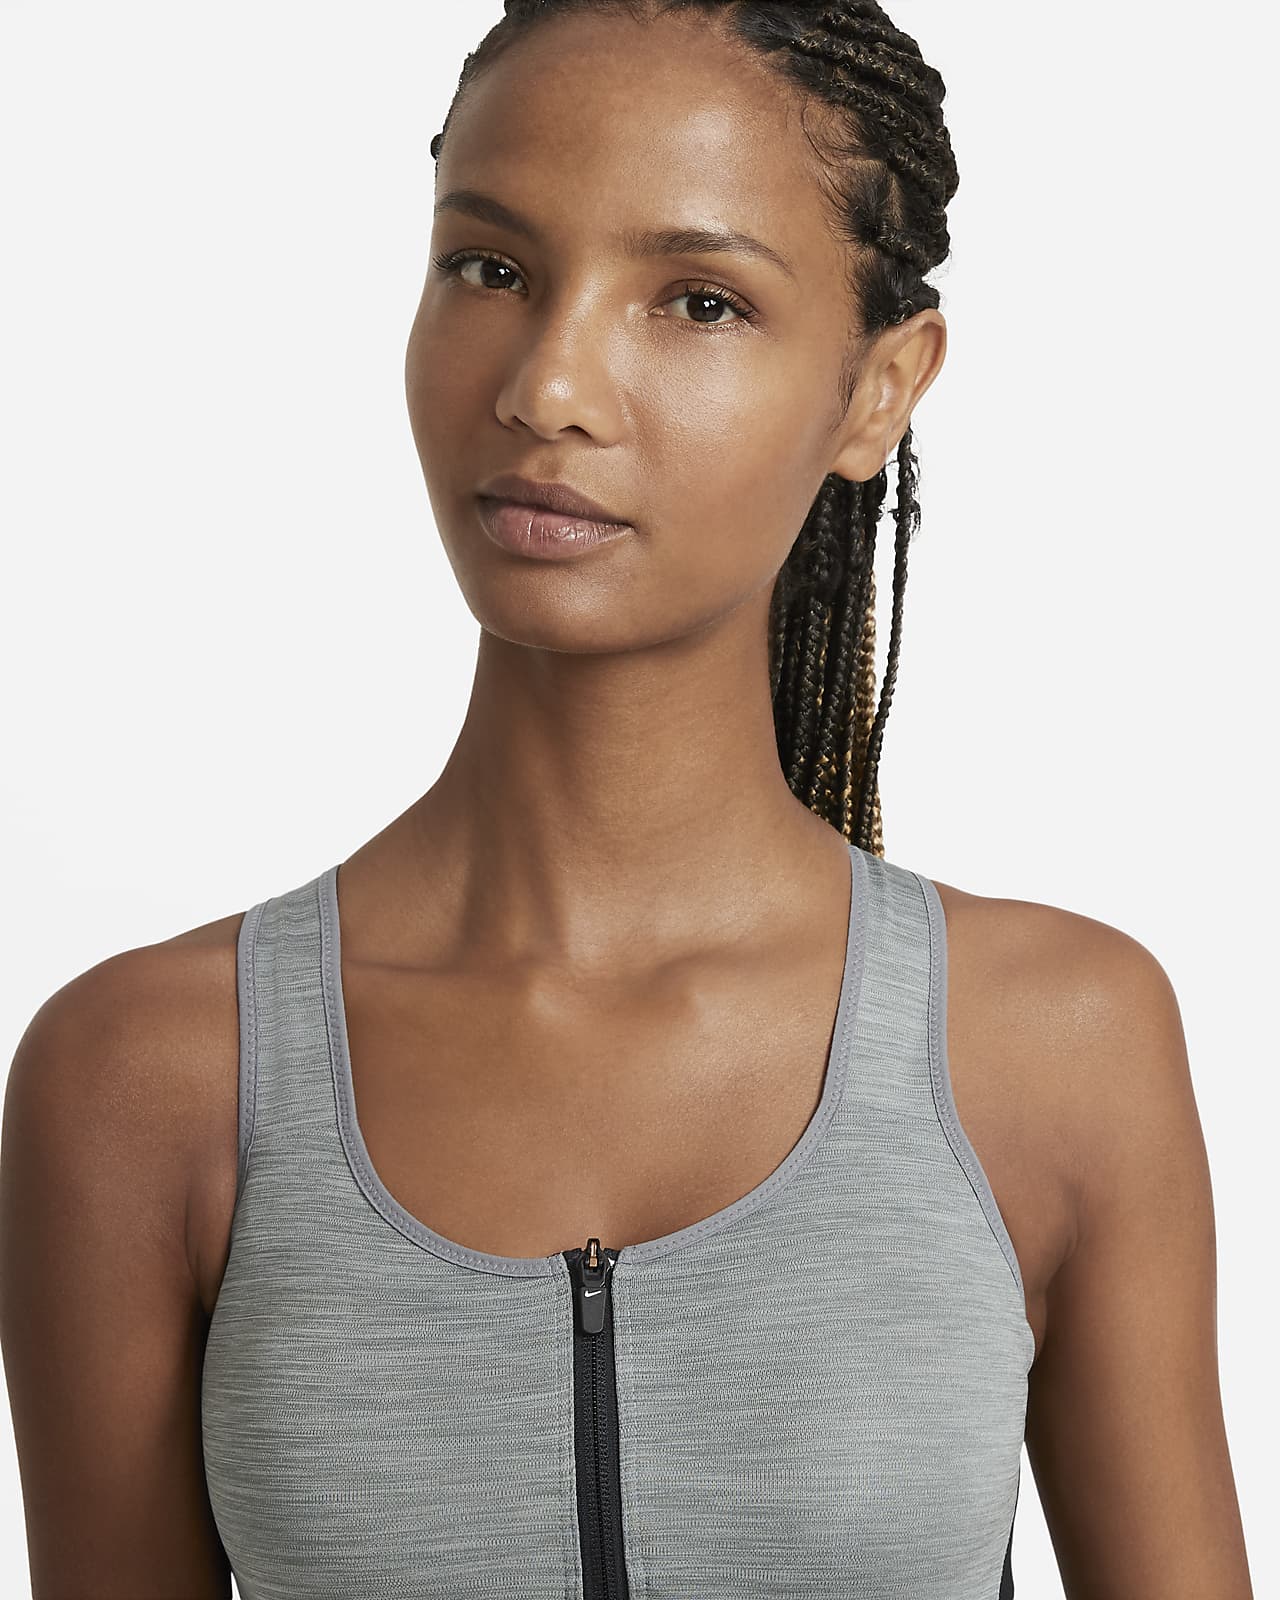 nike women's shape high support zip sports bra